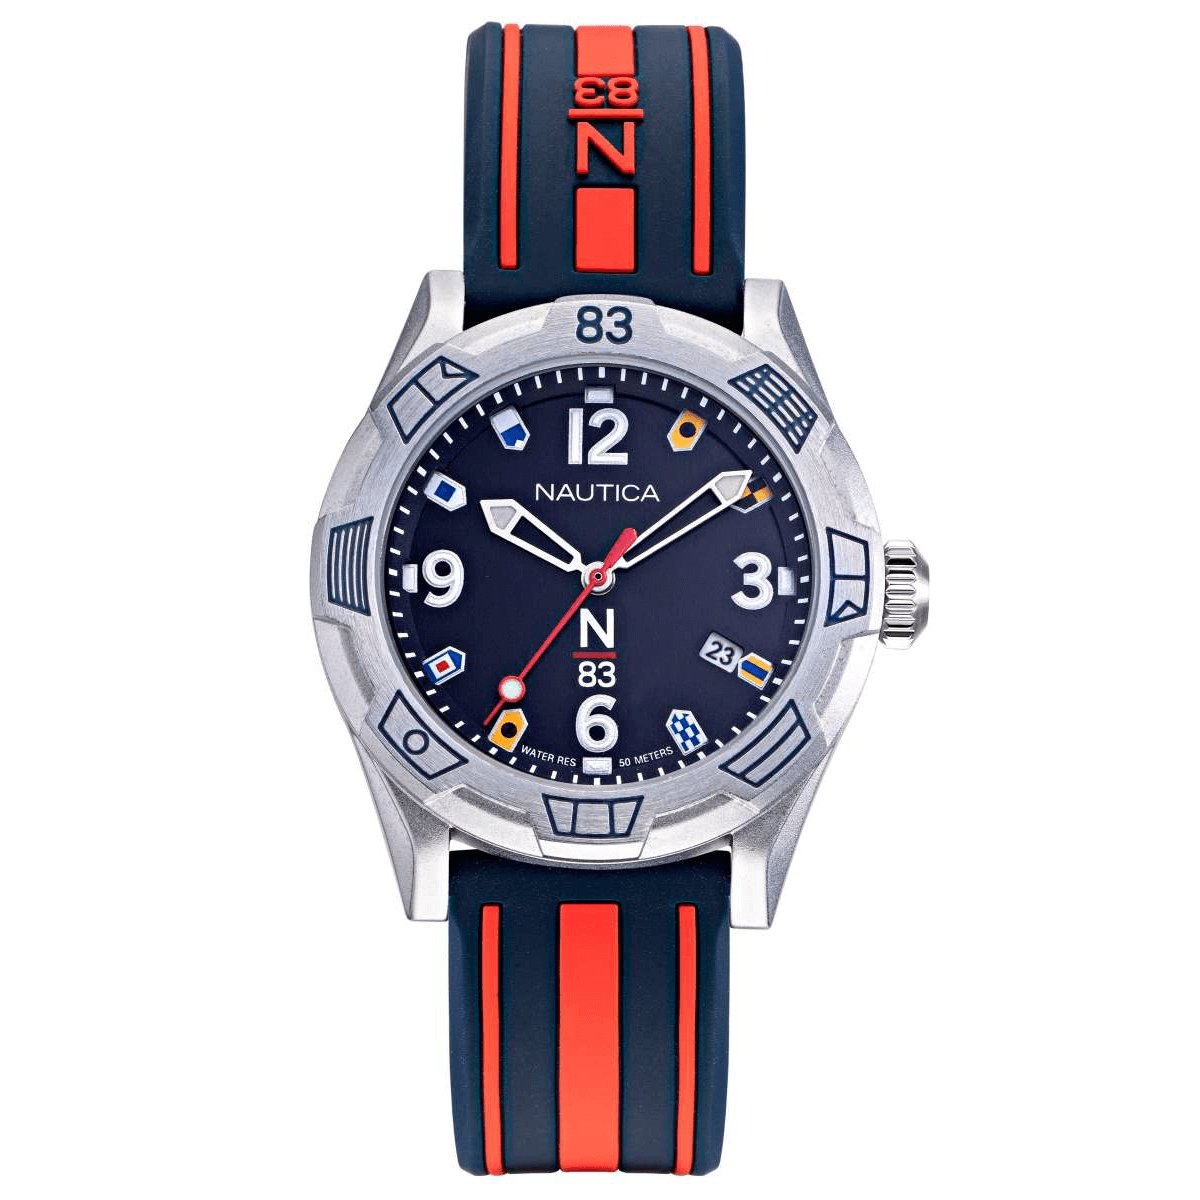 Nautica Men's Watch N-83 Polignano Navy NAPPOF910 - Watches & Crystals